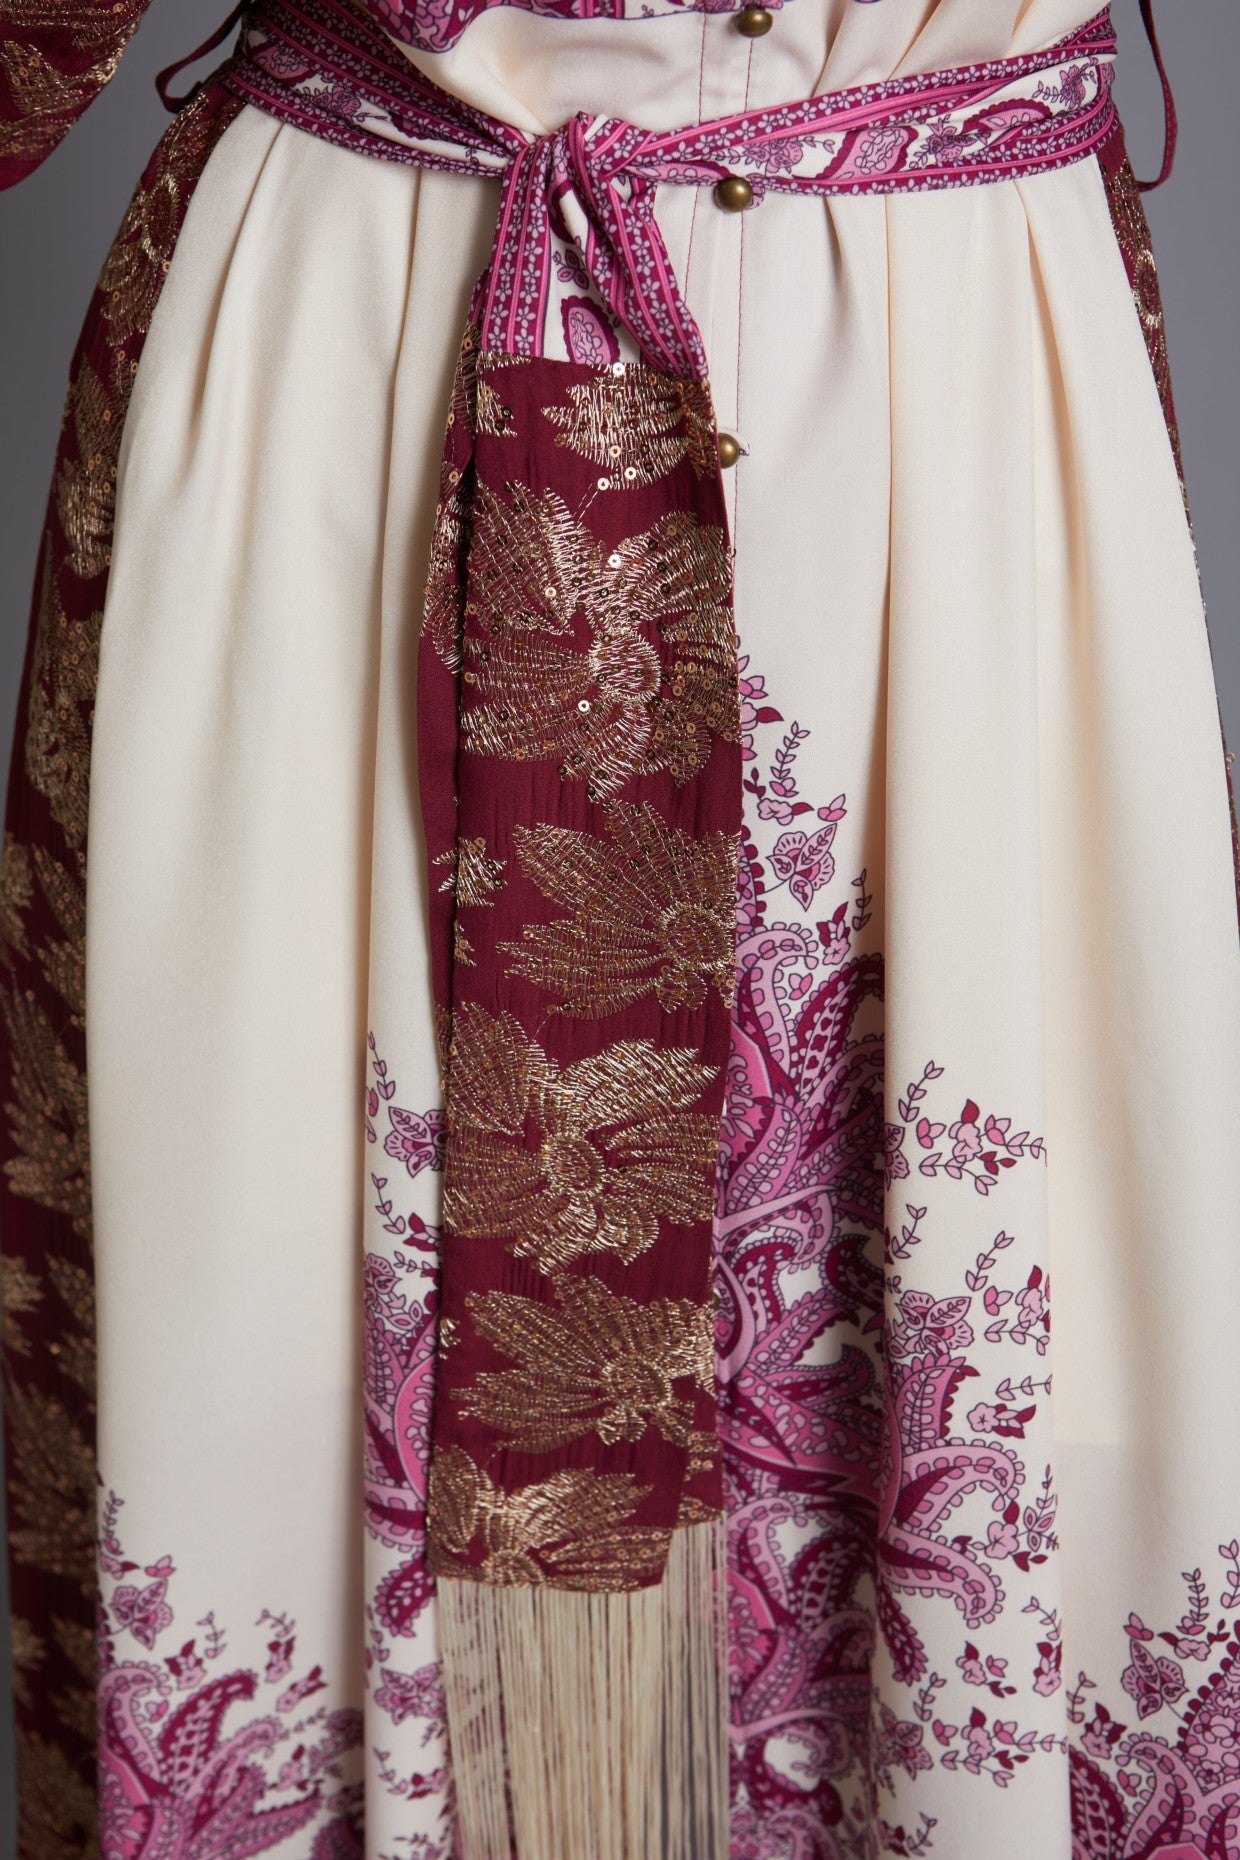 Kimono Bourdeaux by Meisie frente detalhe inferior